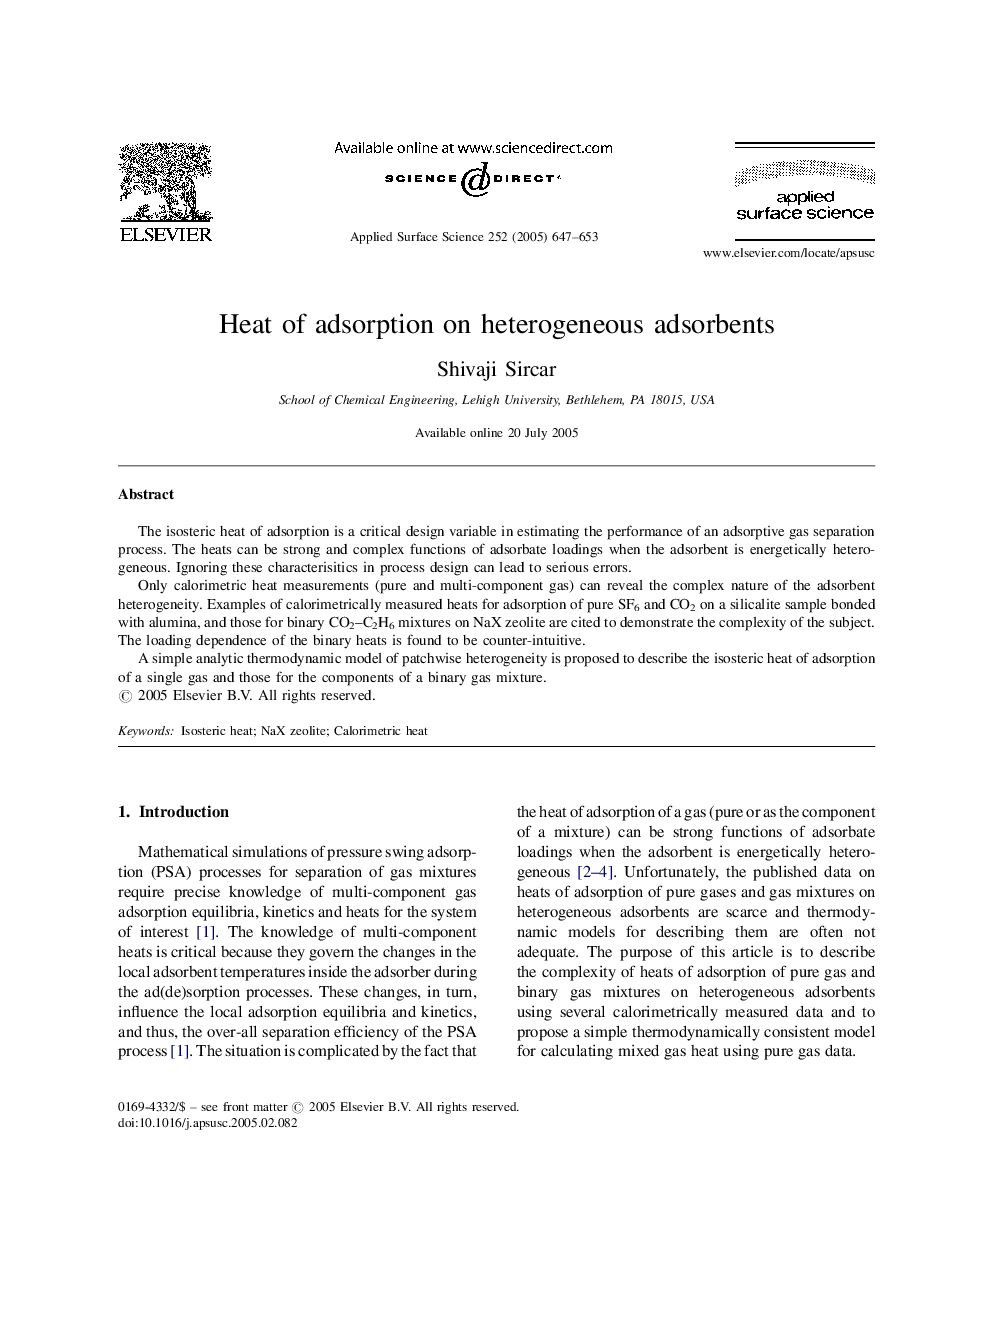 Heat of adsorption on heterogeneous adsorbents